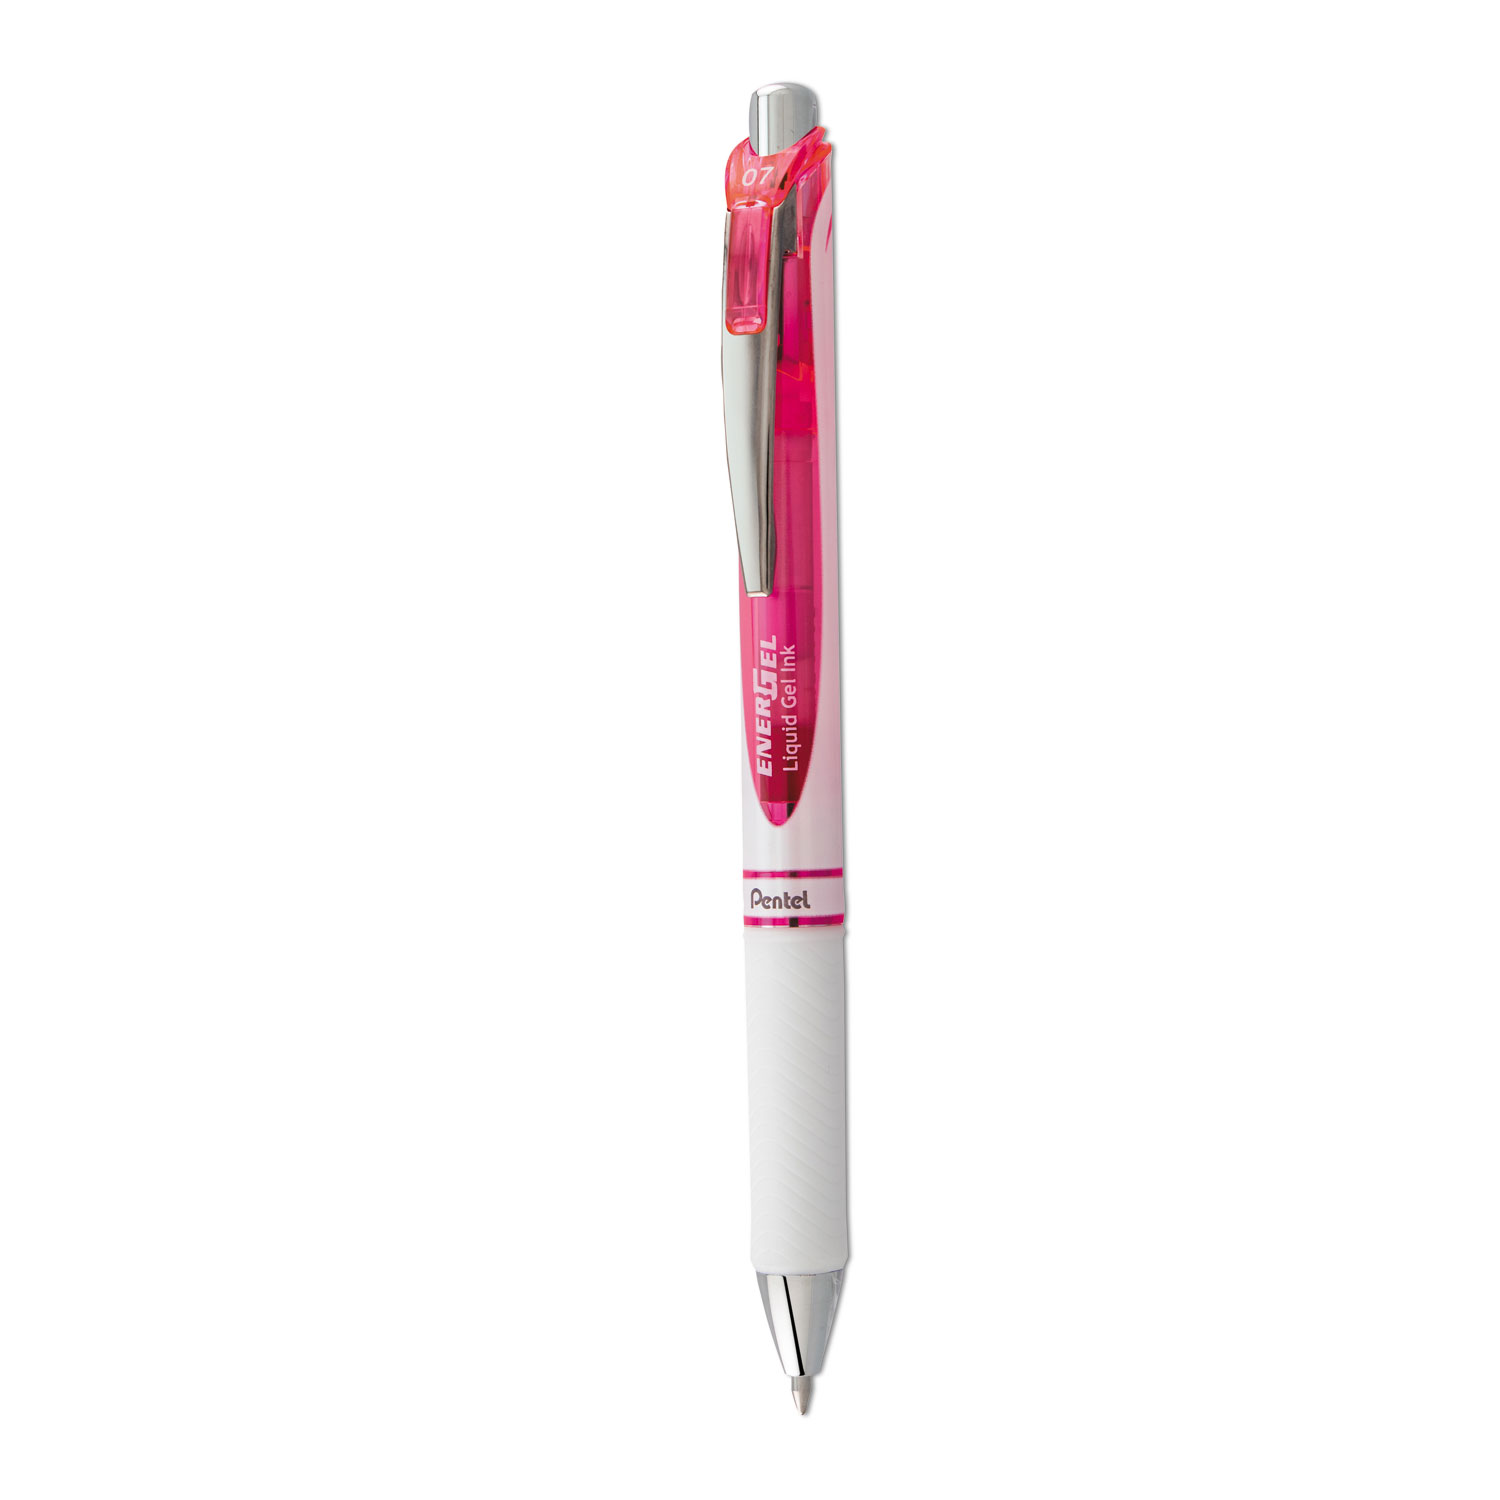 The Best White Ink Pens  Gel ink pens, White gel pen, Pen and ink